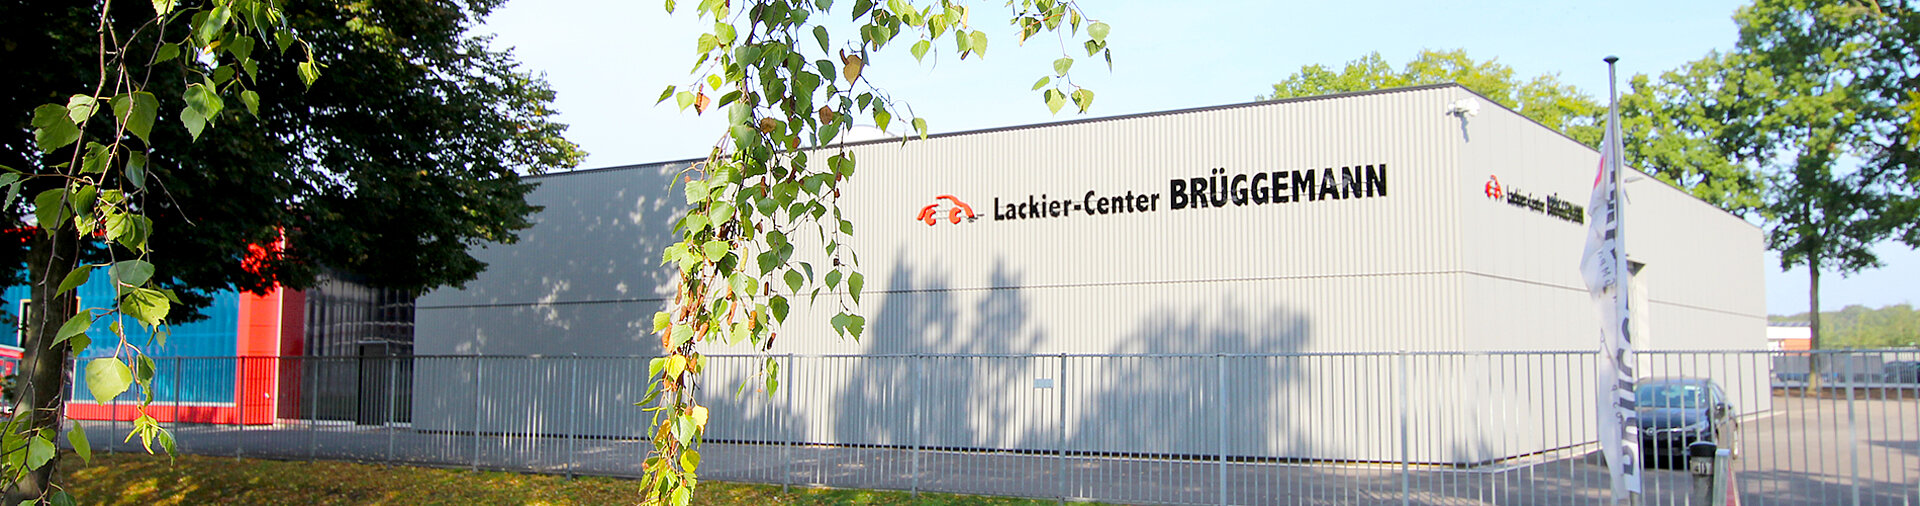 Lackier-Center